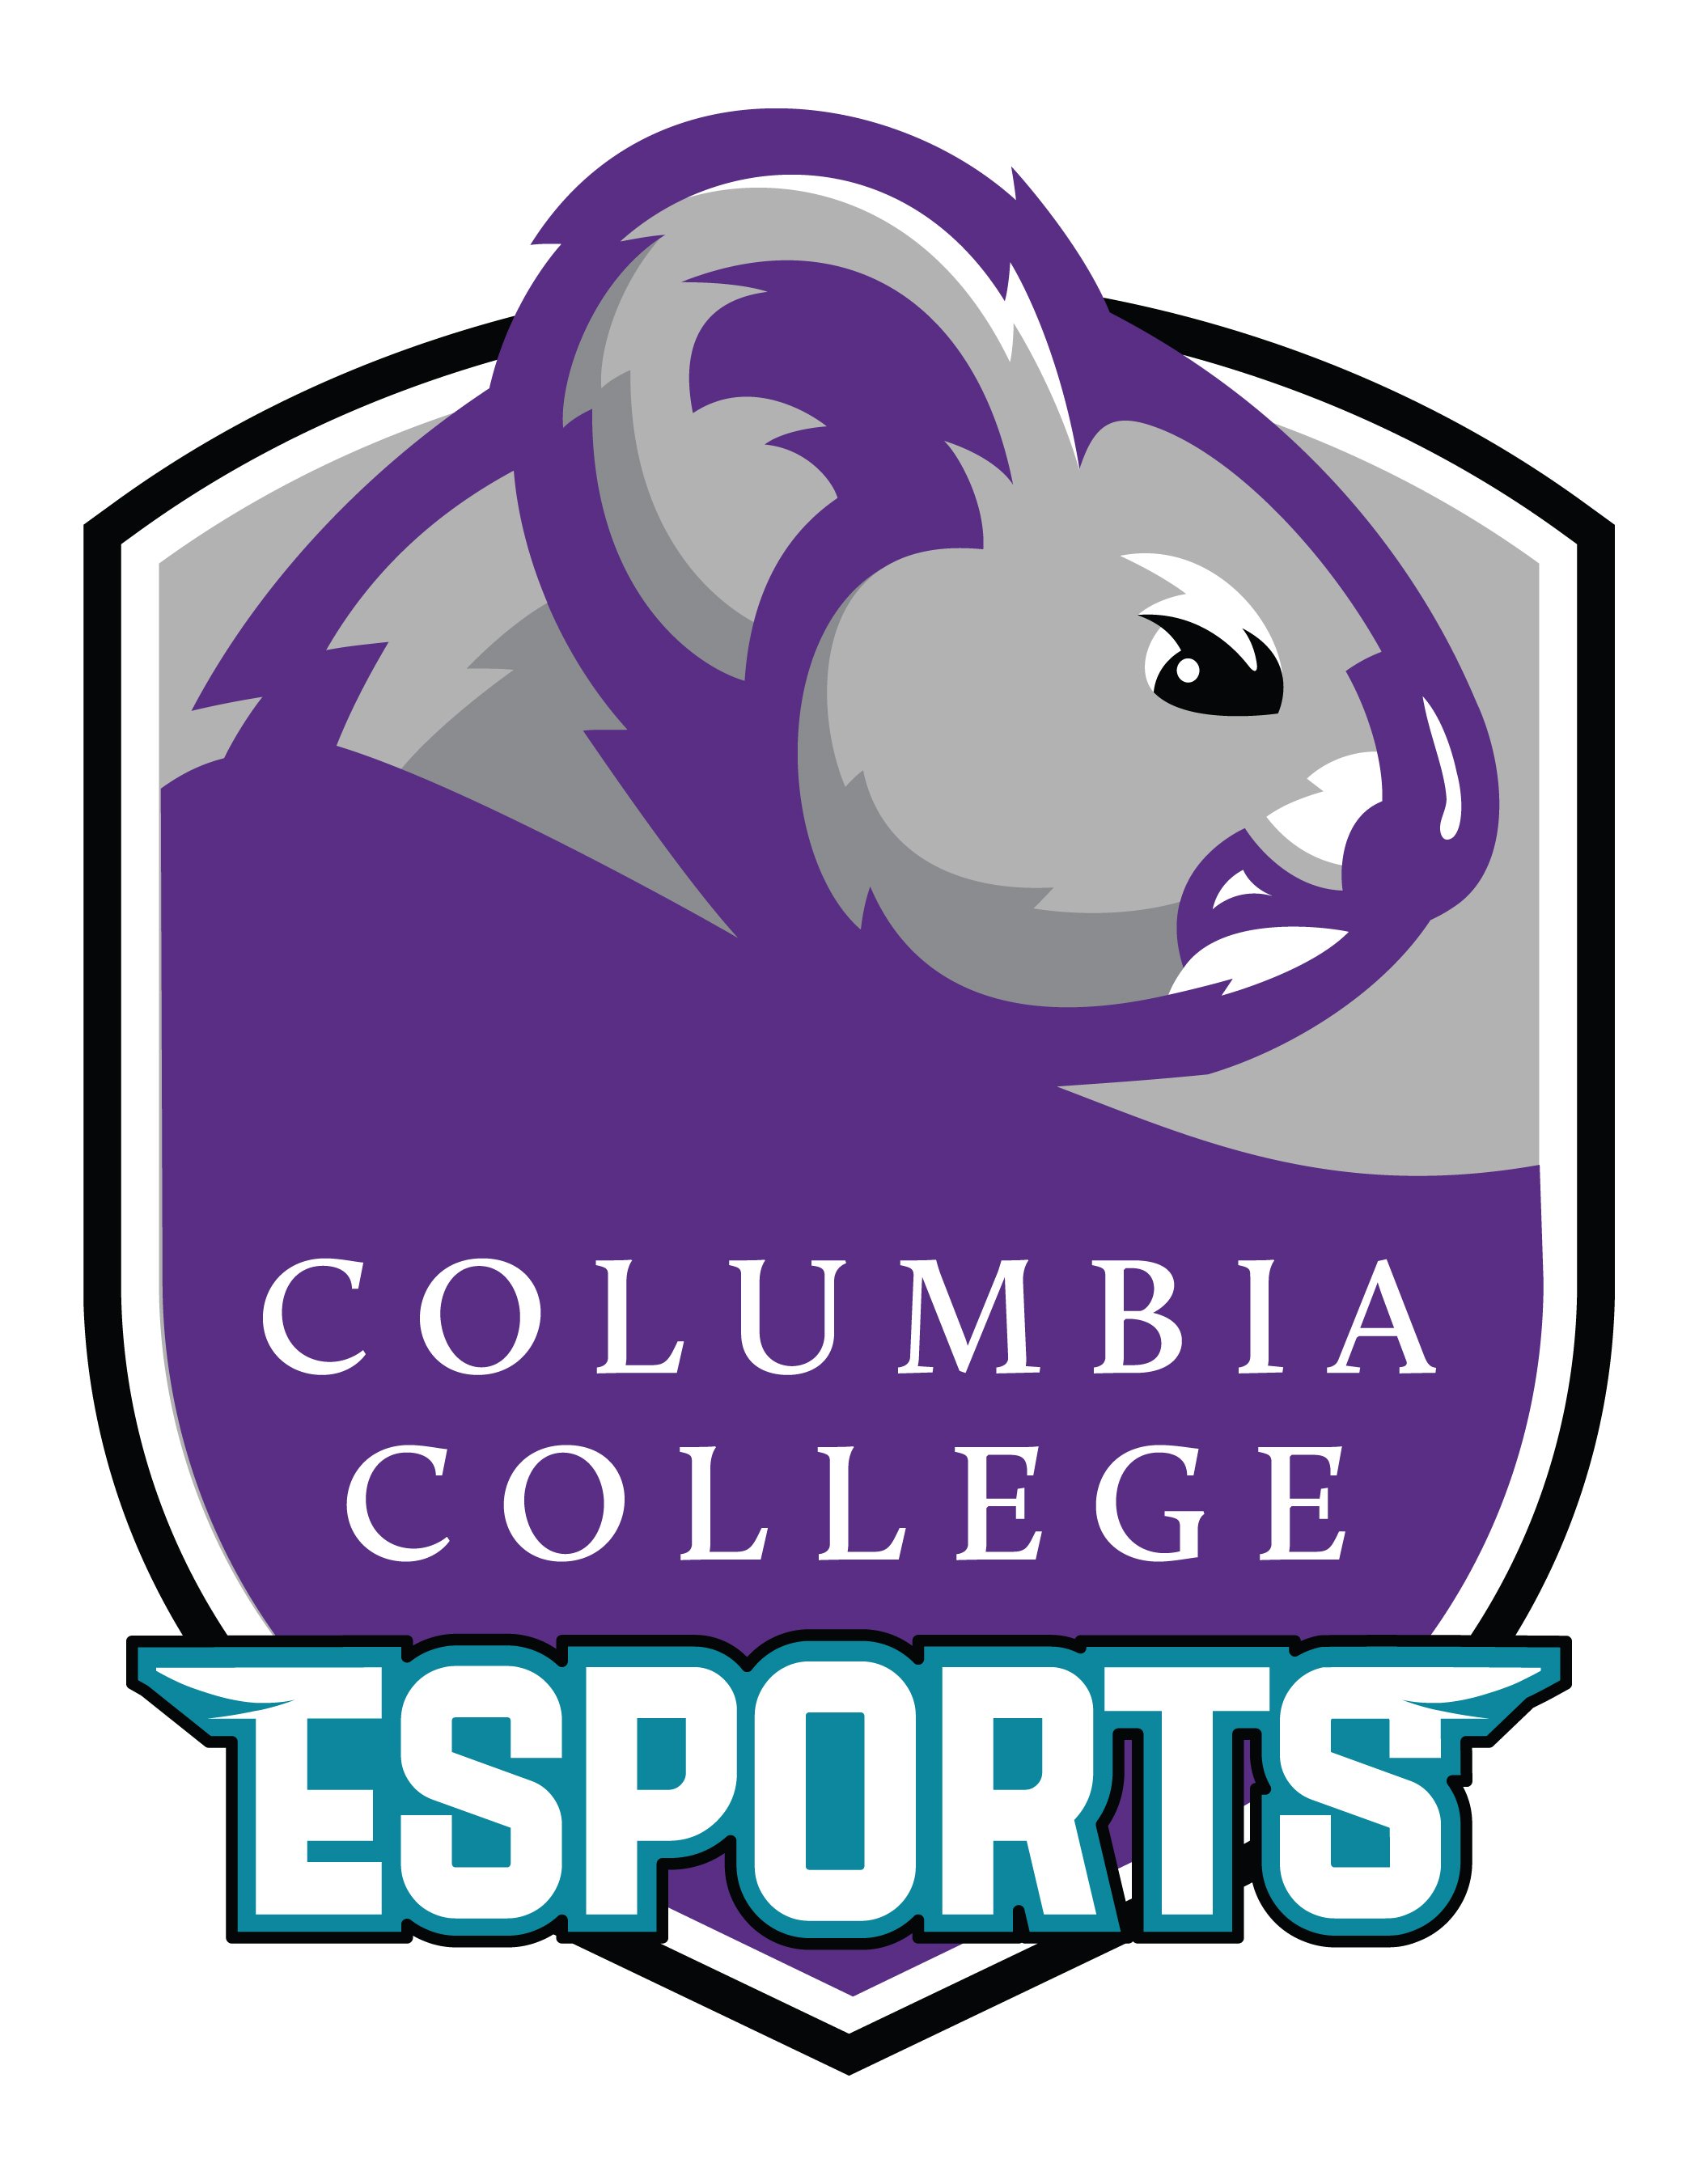 ColumbiaCollege_EsportsLogo.jpg